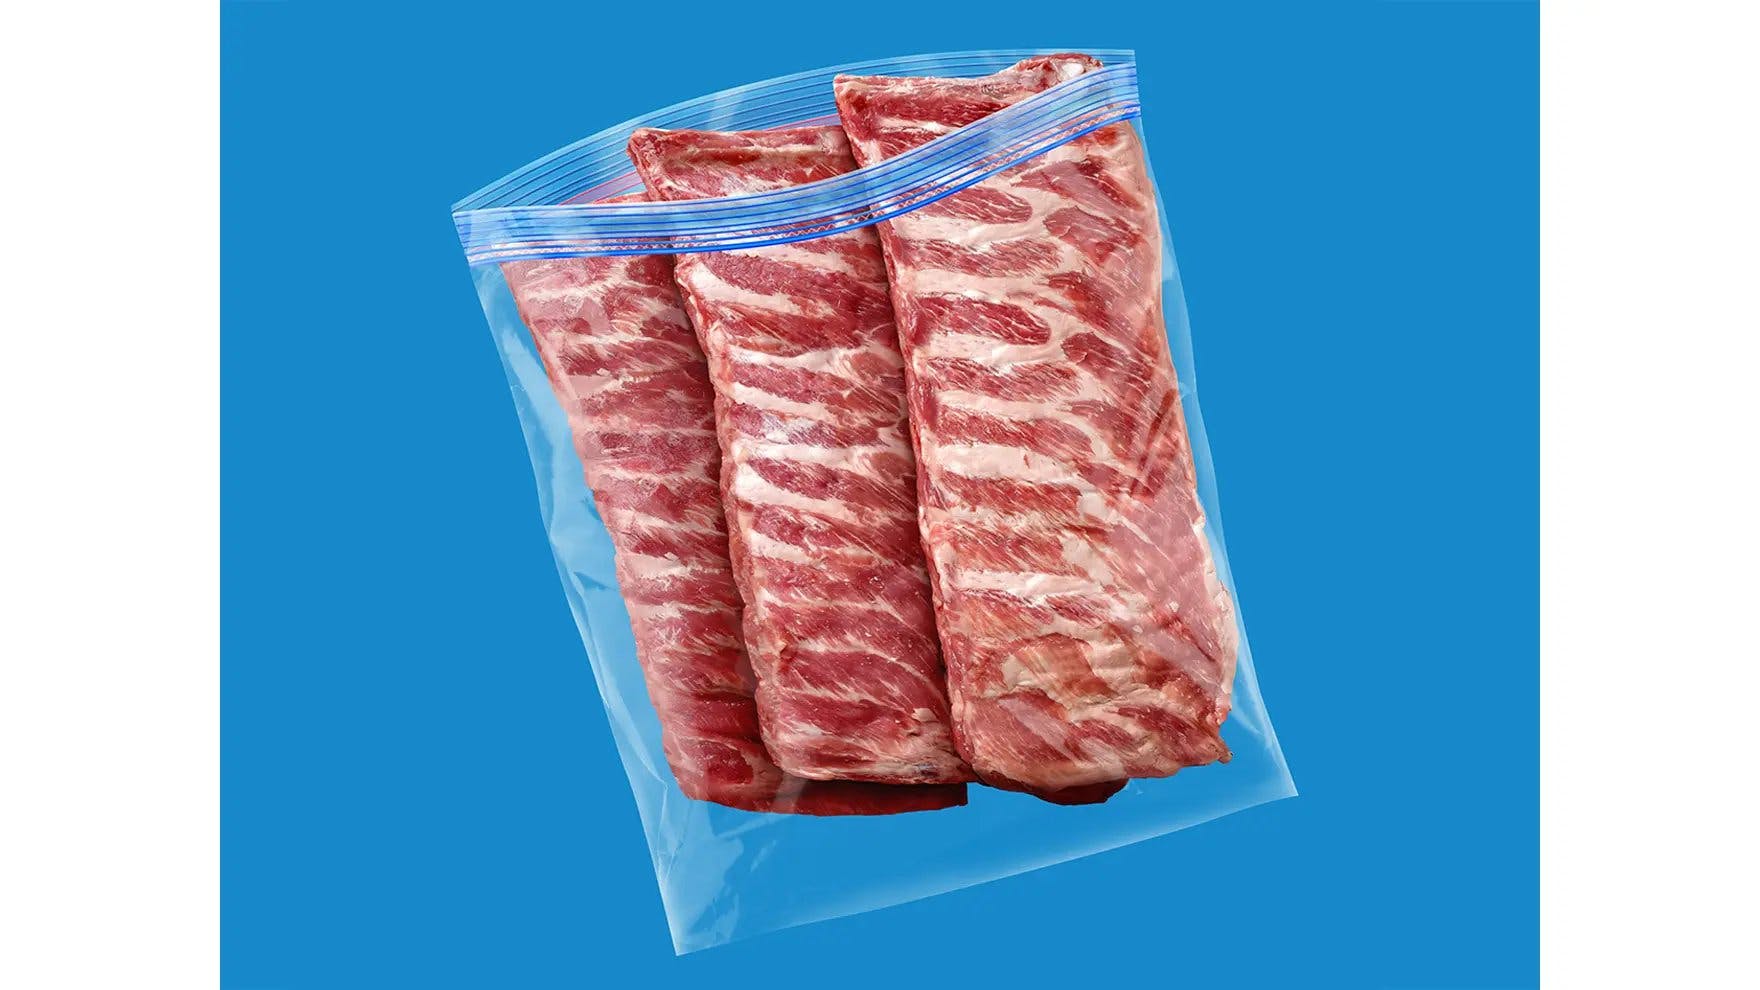 Three racks of ribs inside an Ziploc® brand extra large freezer bag